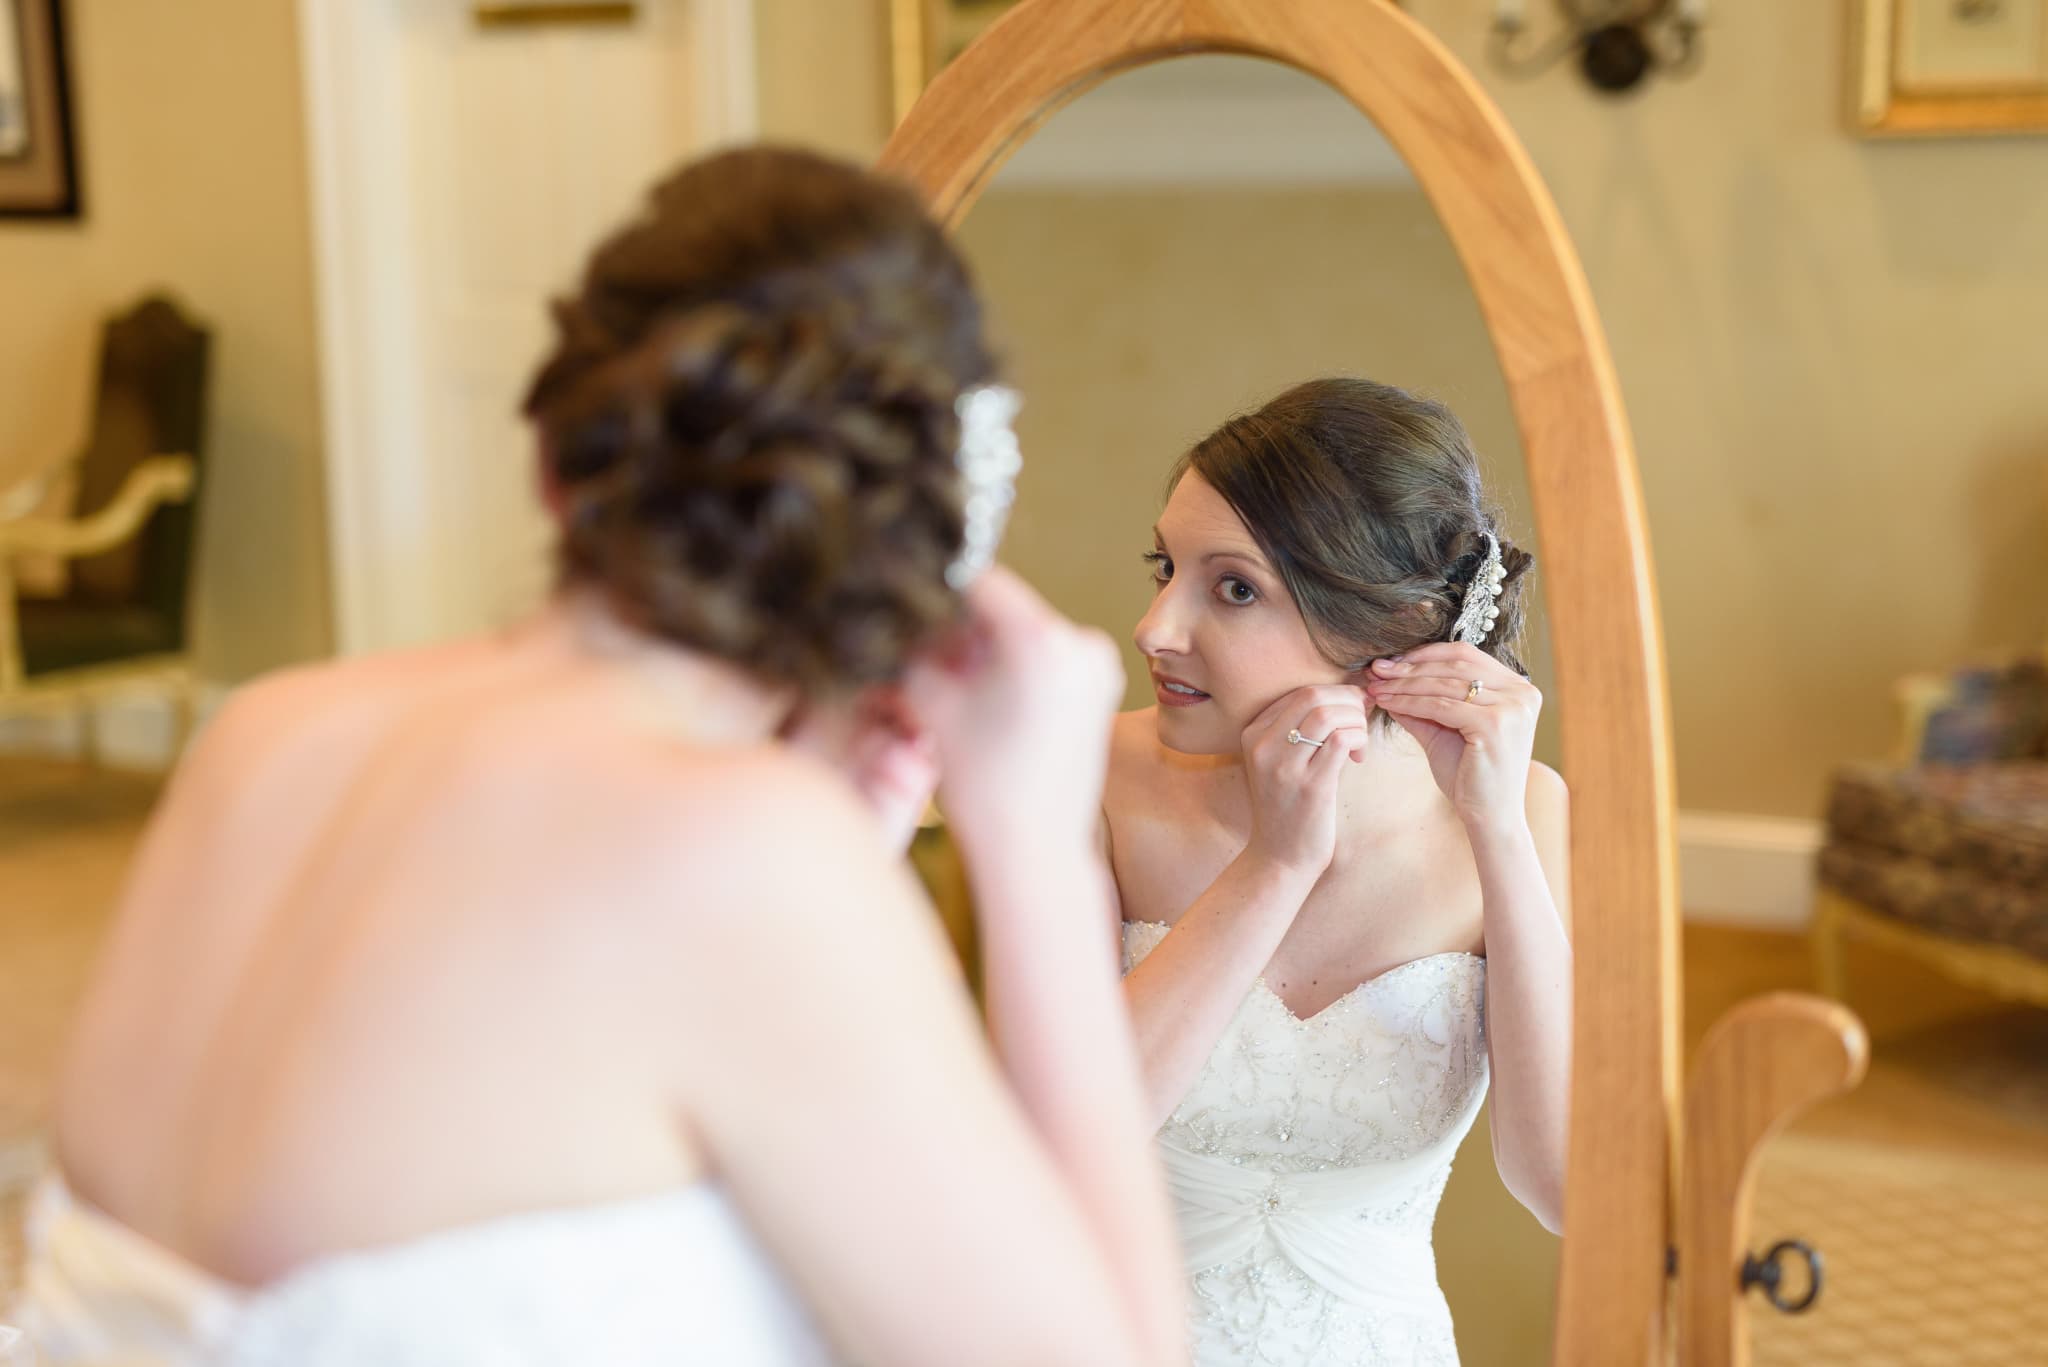 Bride putting on earing in mirror - Pawleys Plantation